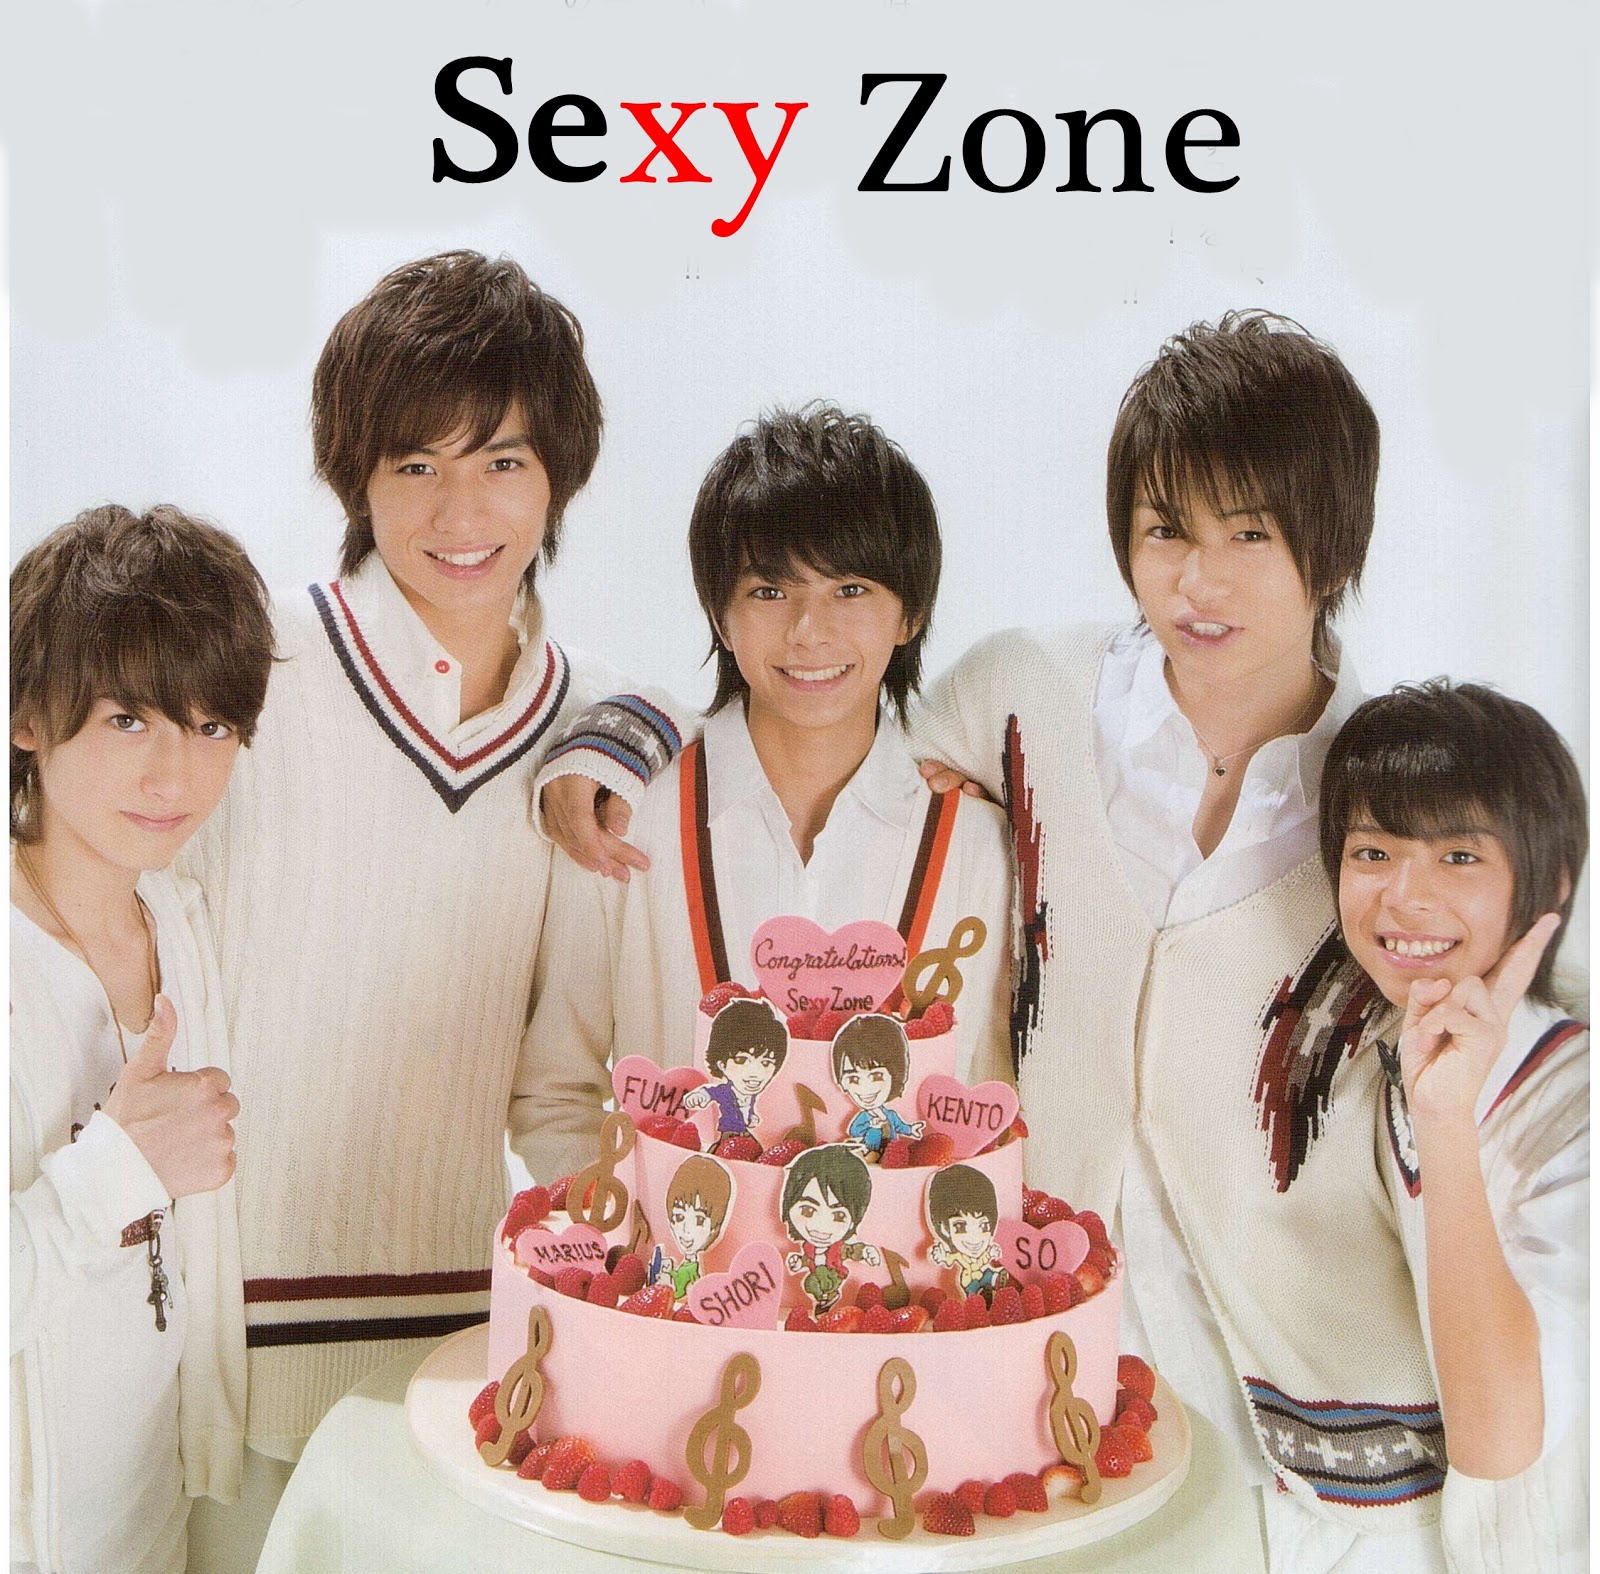 Zone Sexy 7